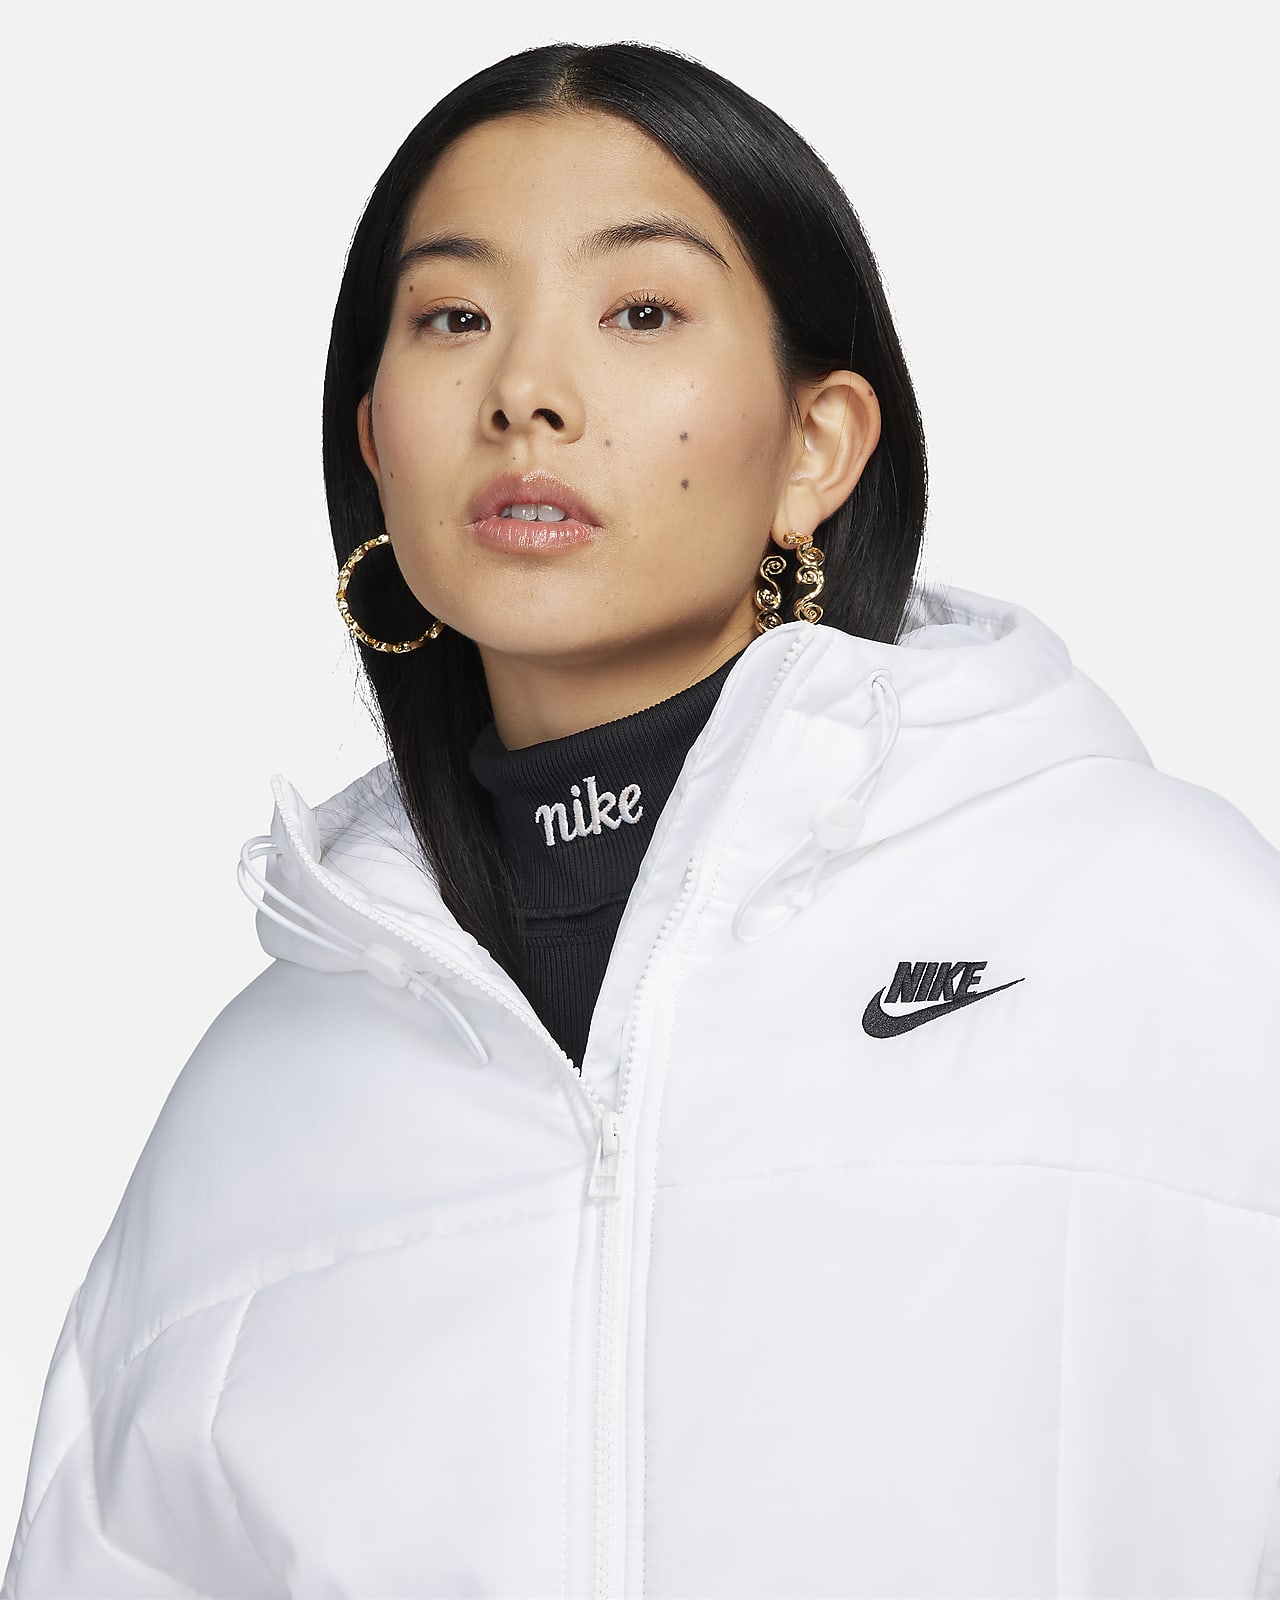 NIKE Women's Nike Sportswear Therma-FIT Repel Hooded Classic Puffer Jacket